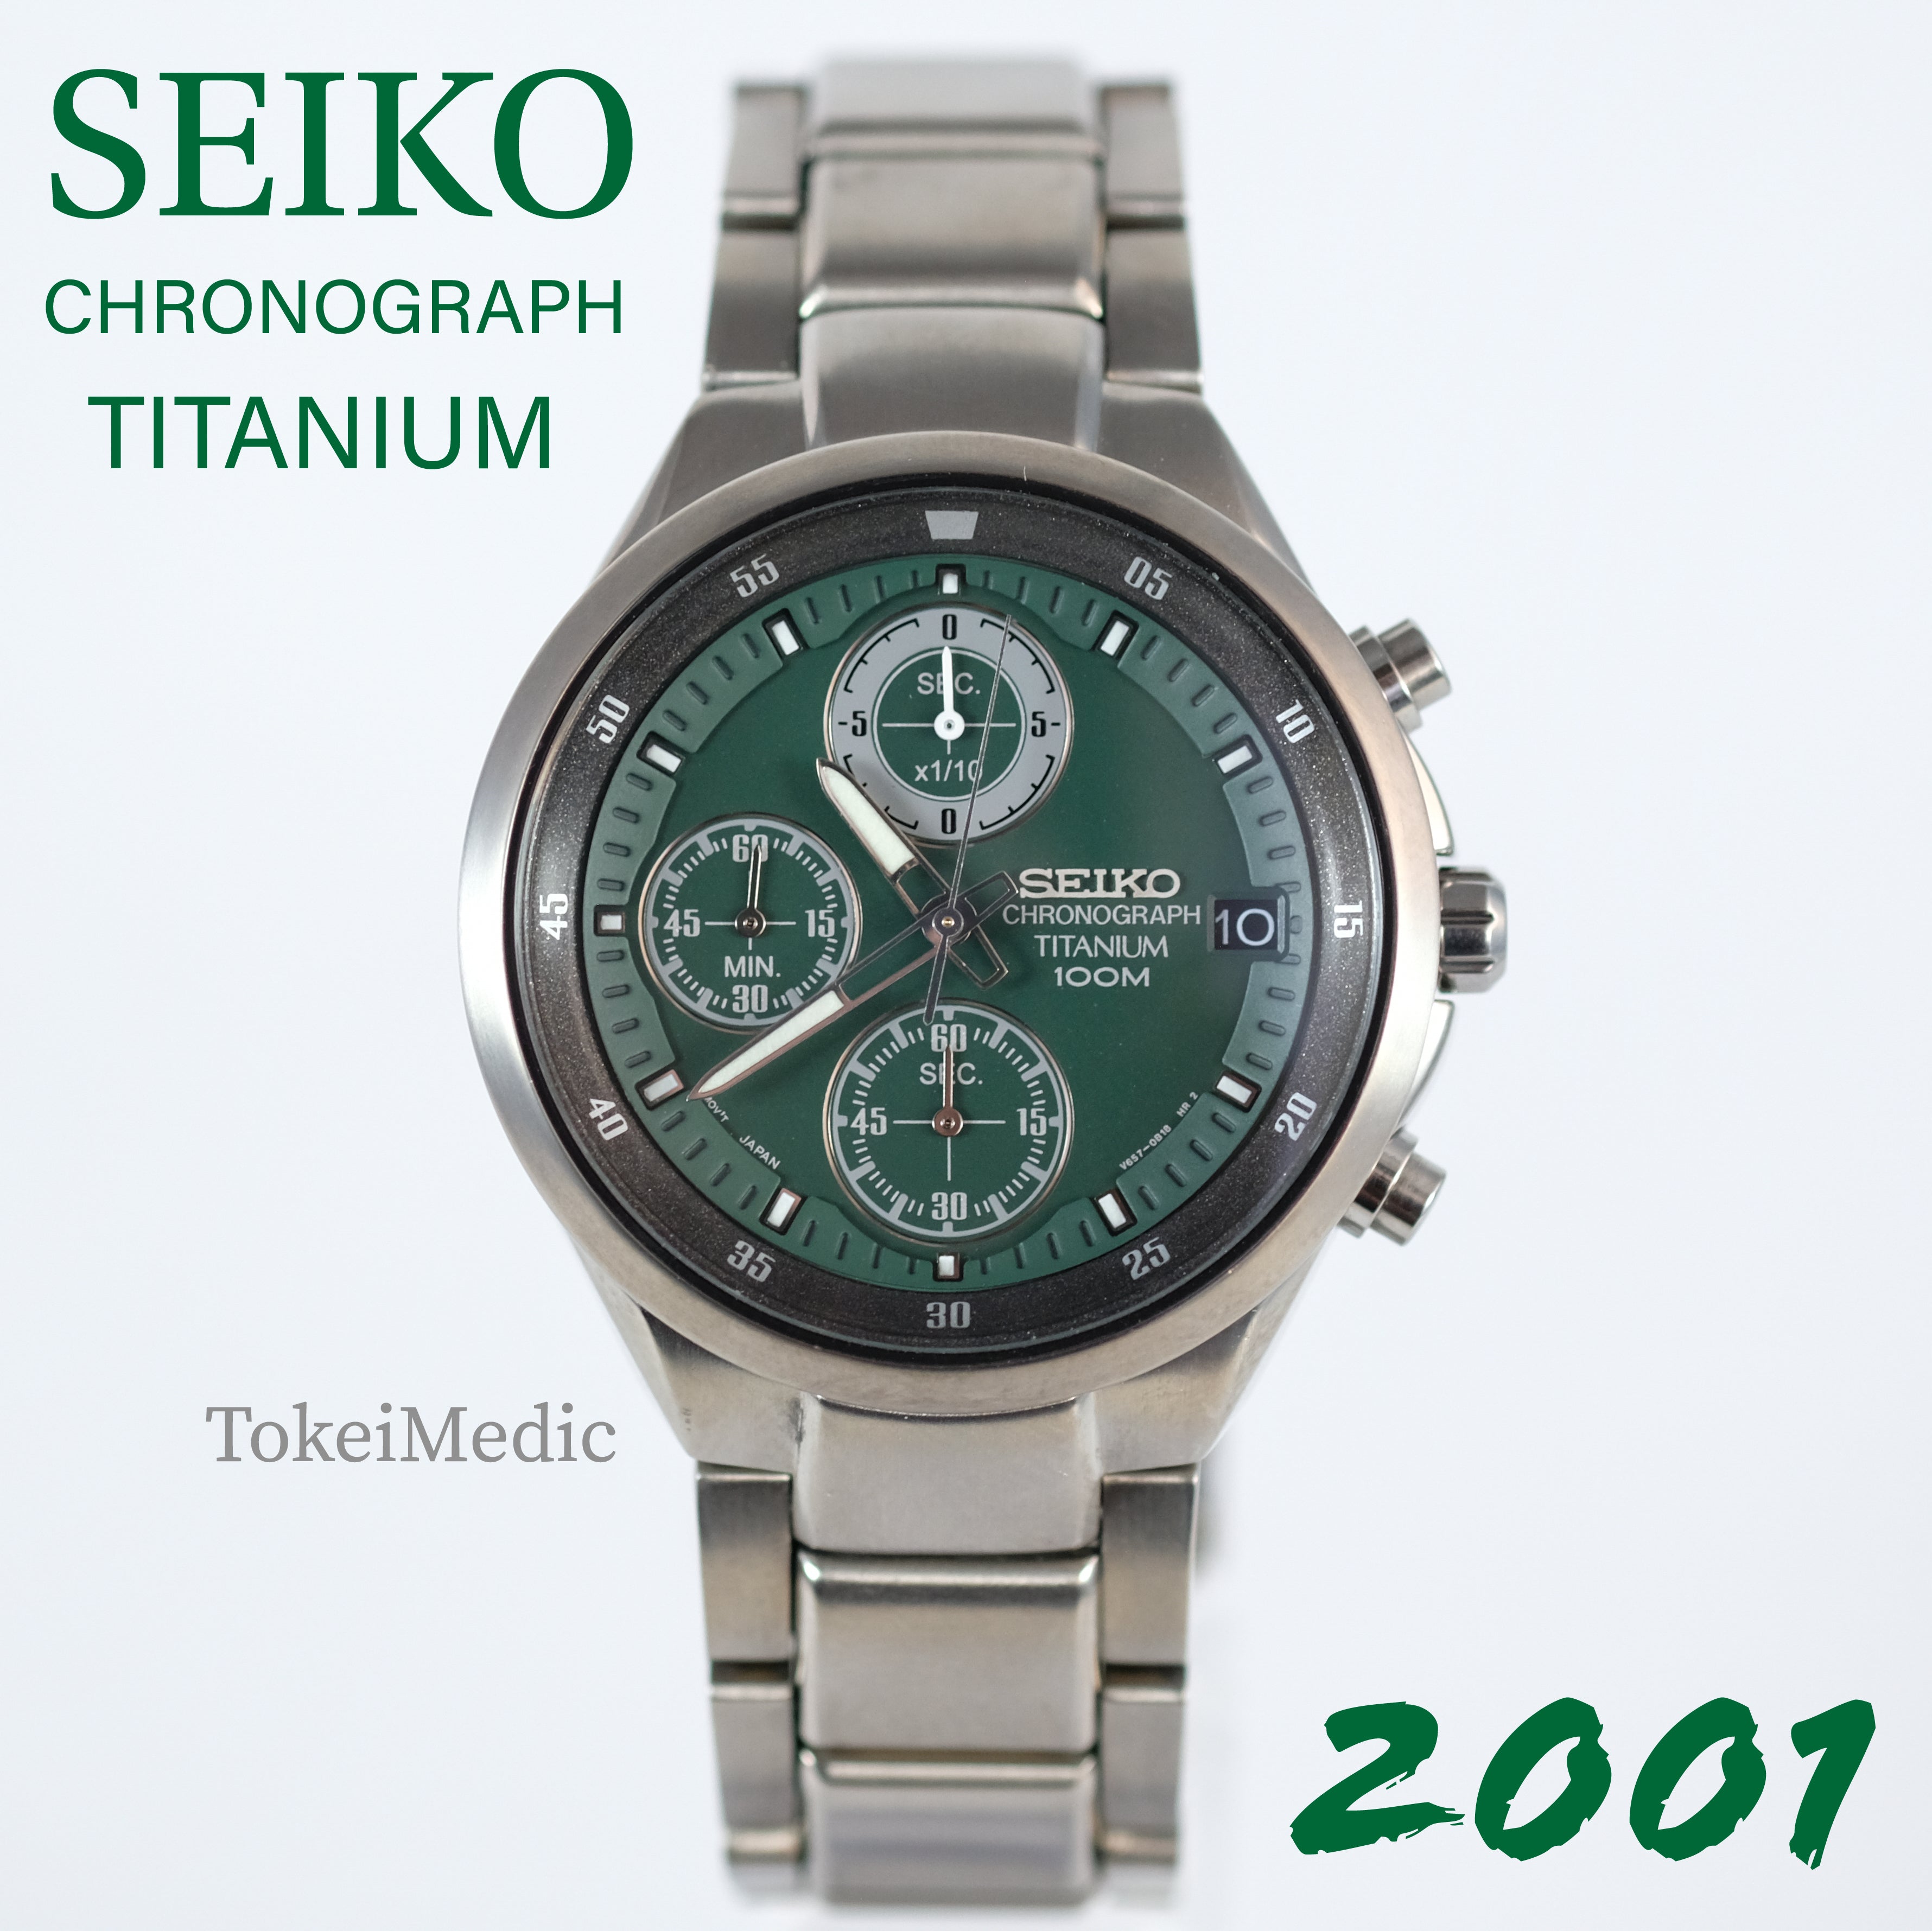 2001 Seiko Chronograph Titanium V657-0B00